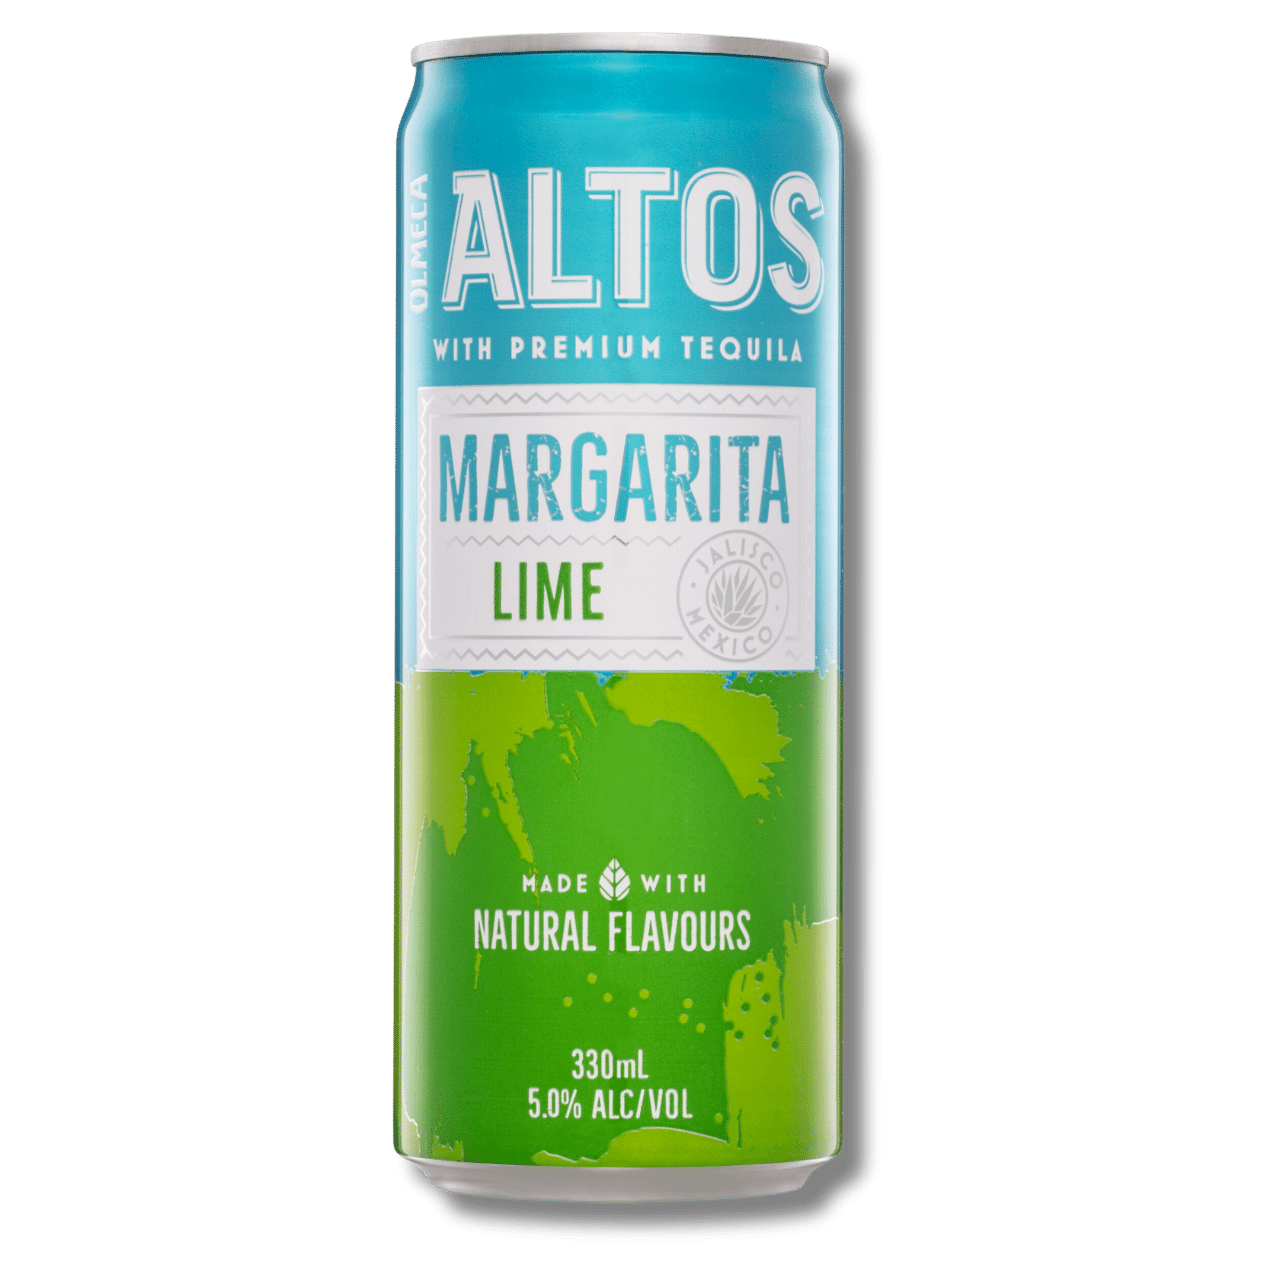 Olmeca Altos Tequila Lime Margarita 330ml